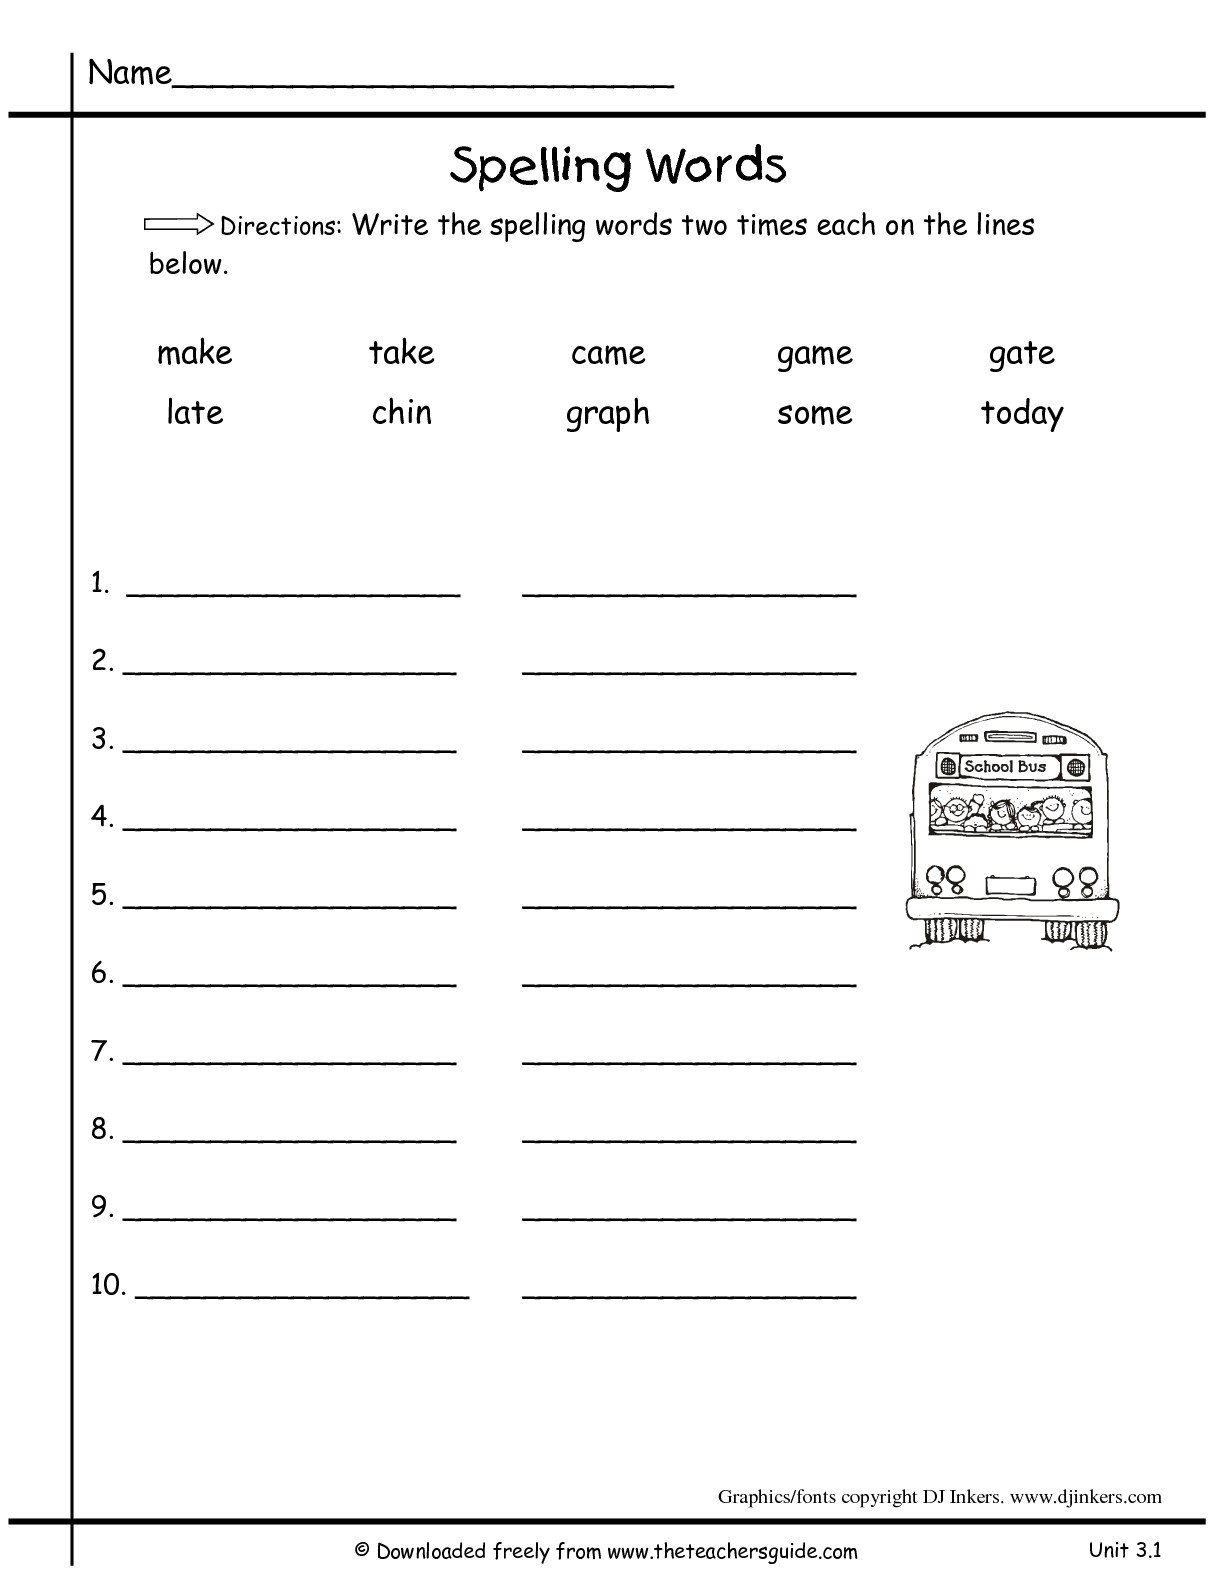 Accounting  Spelling Test Printable Worksheets  Spelling Test